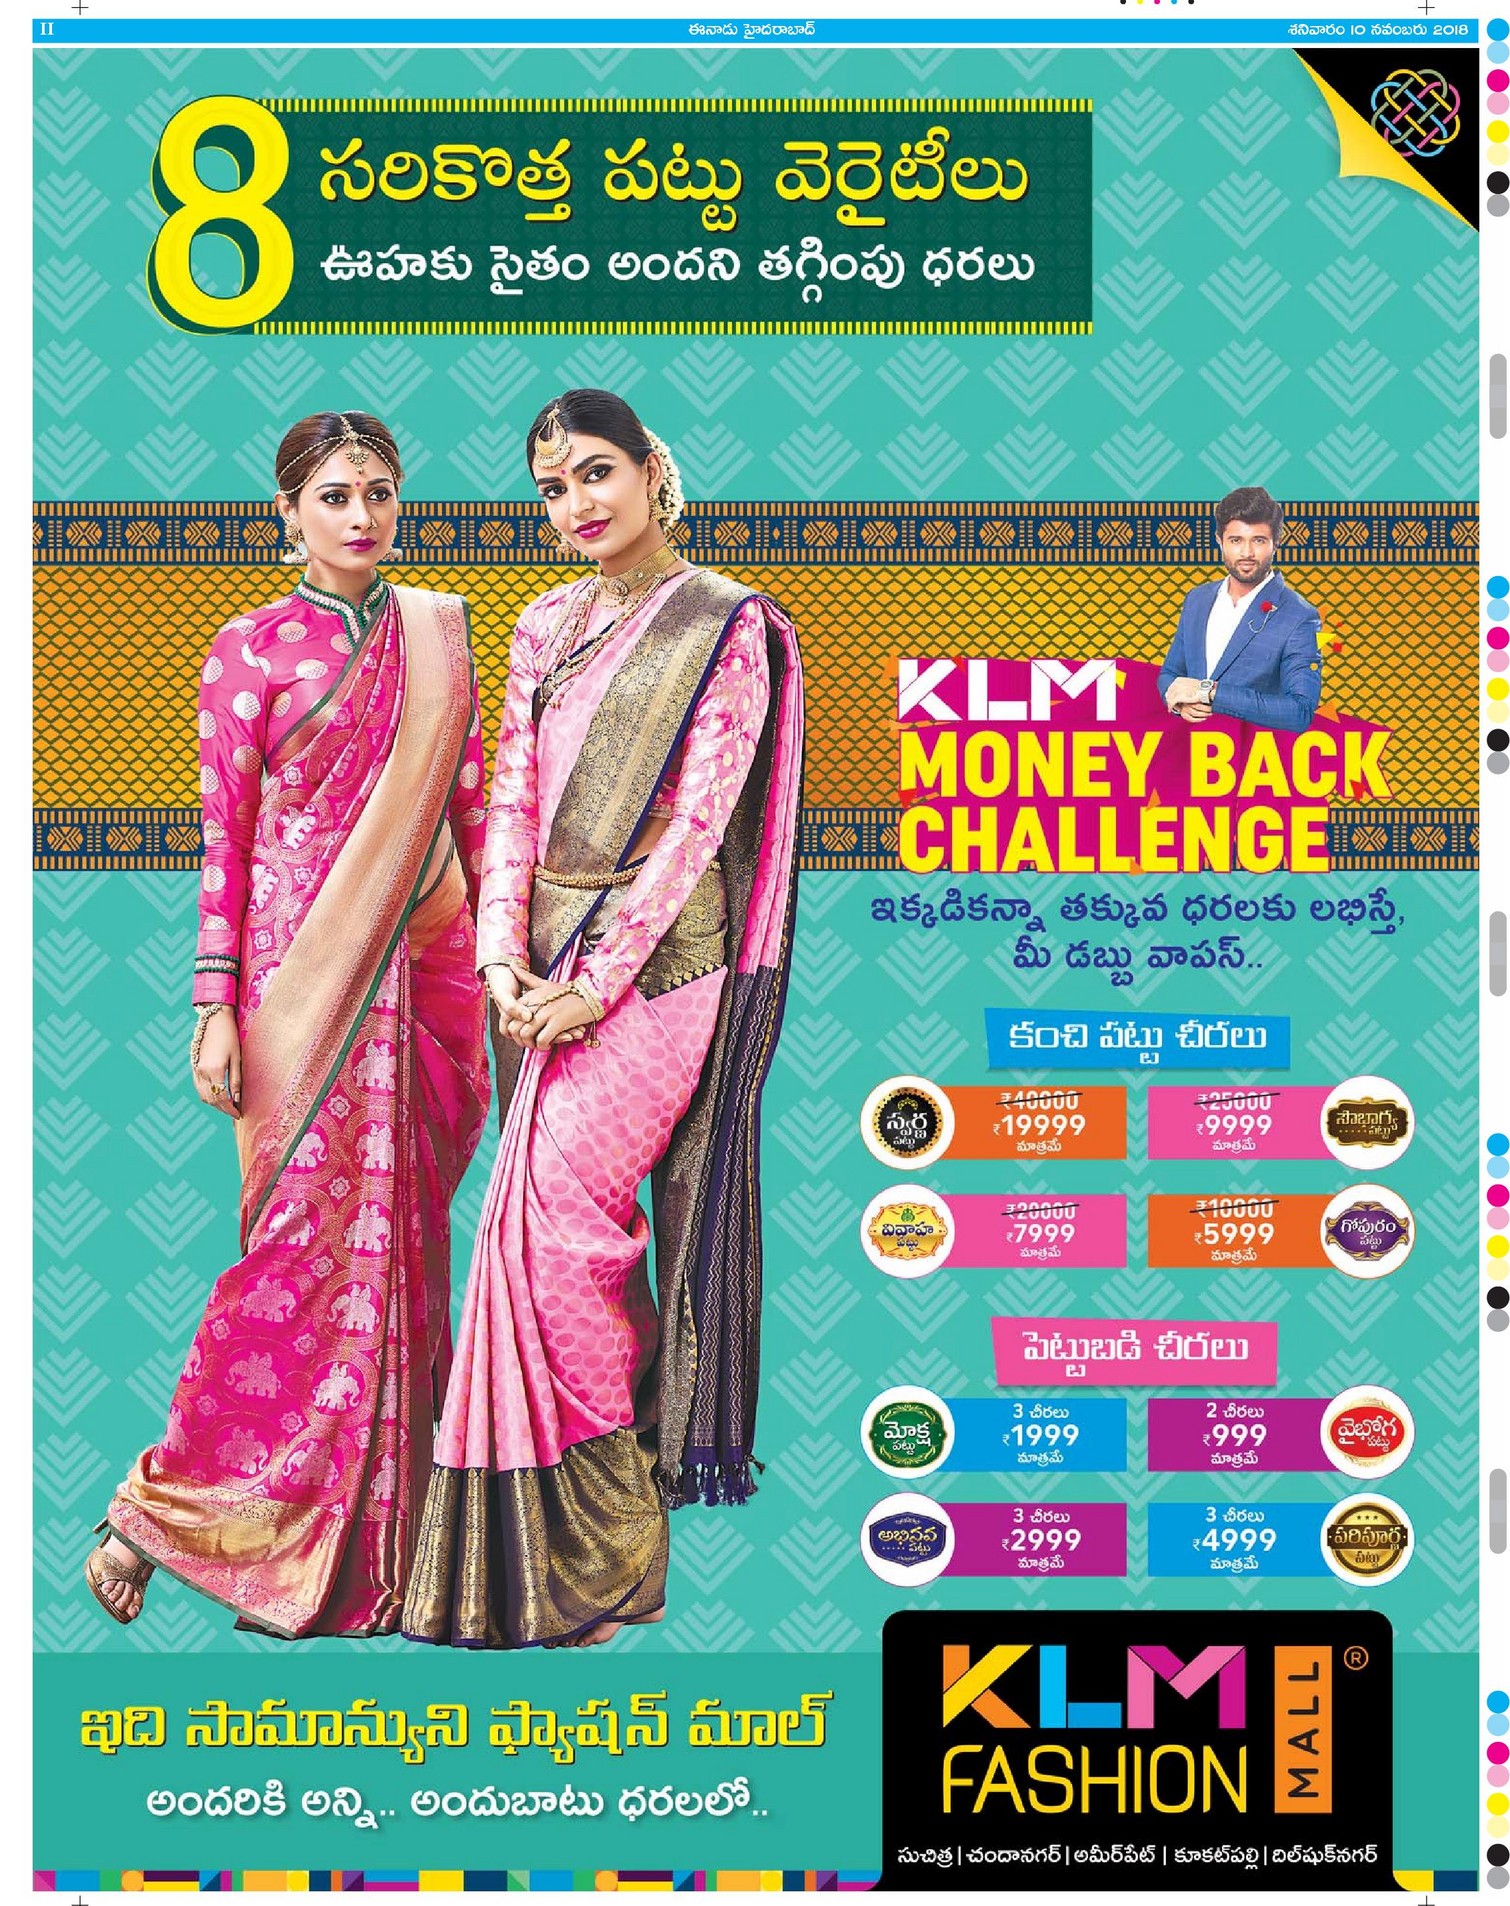 Klm Fashion Mall Klm Money Back Challenge Ad Advert Gallery